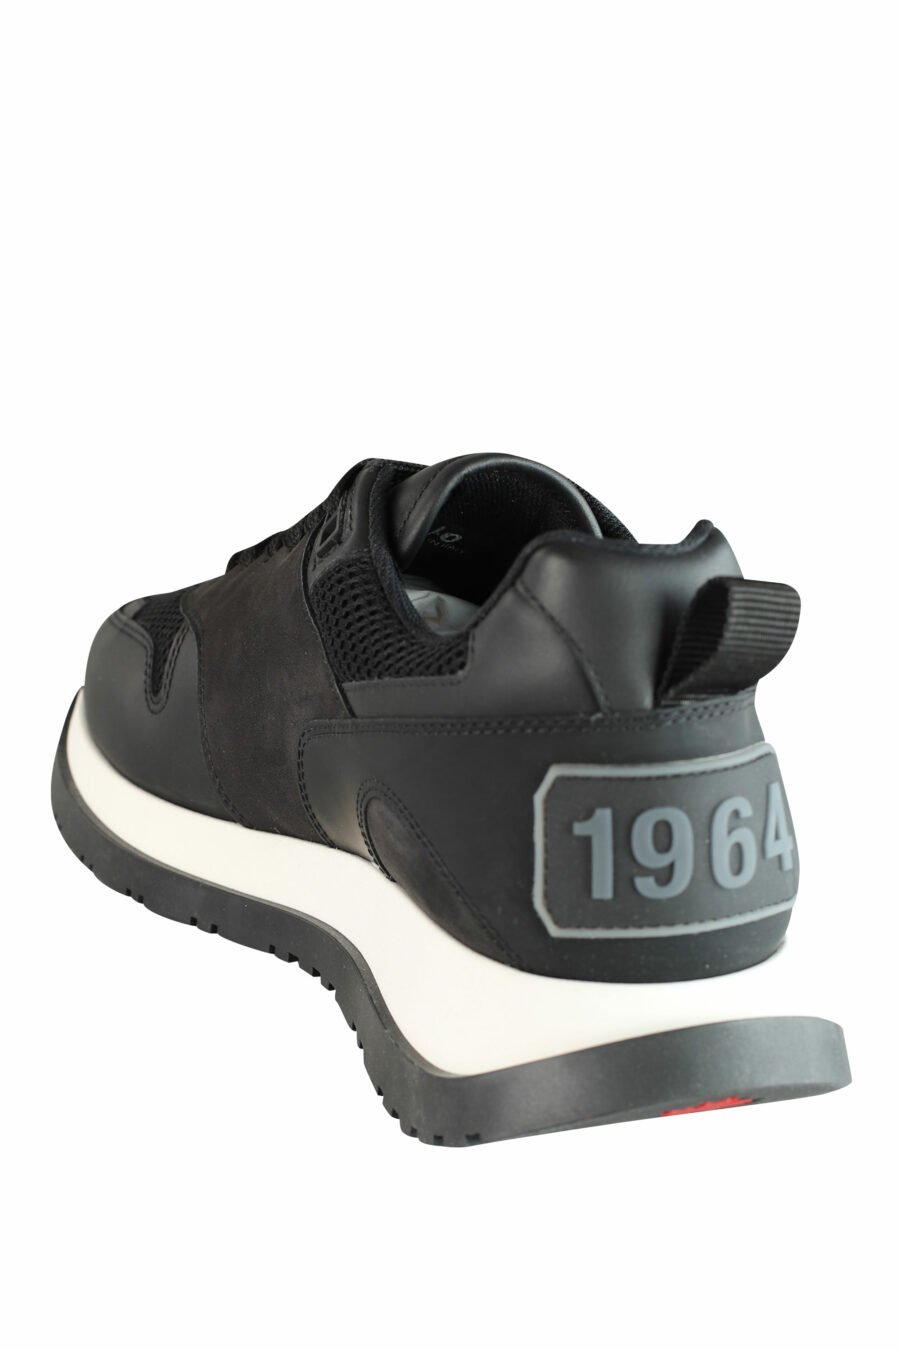 Zapatillas negras "running" con suela blanca con logo negro - IMG 1434